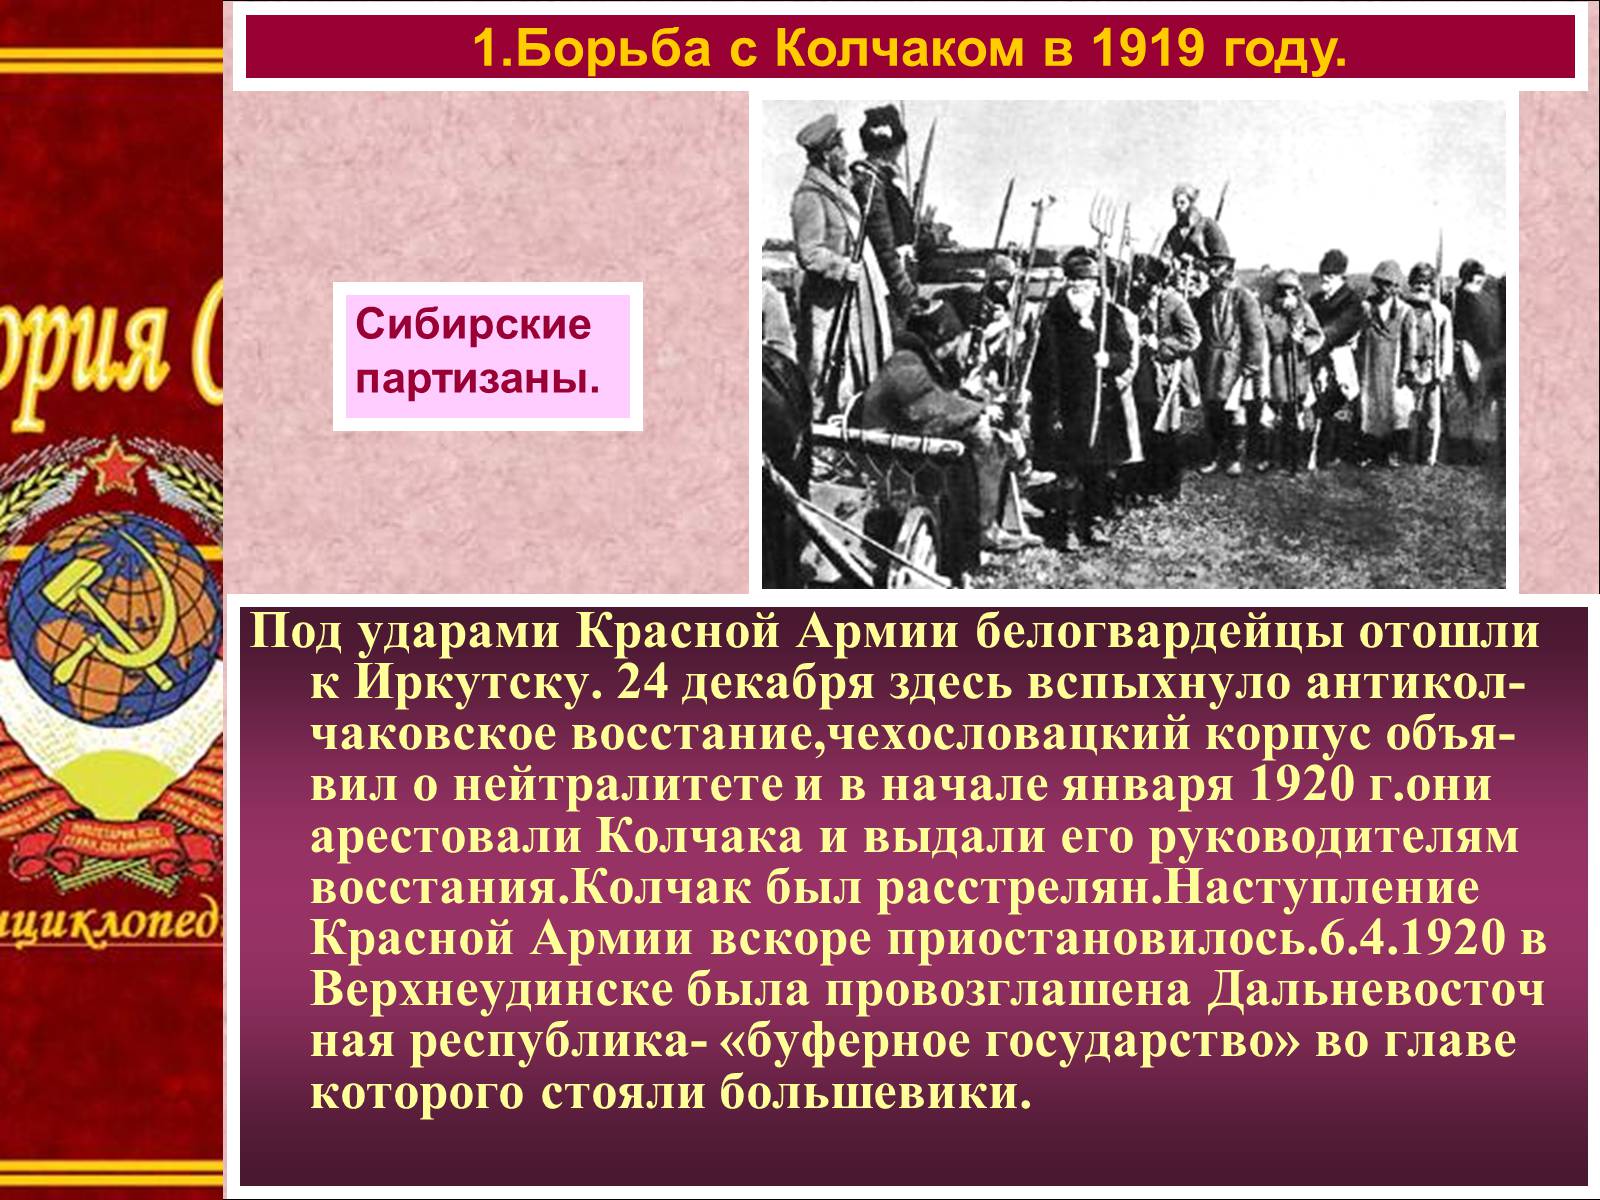 Презентація на тему «Гражданская война в 1919-1920 гг.» - Слайд #5